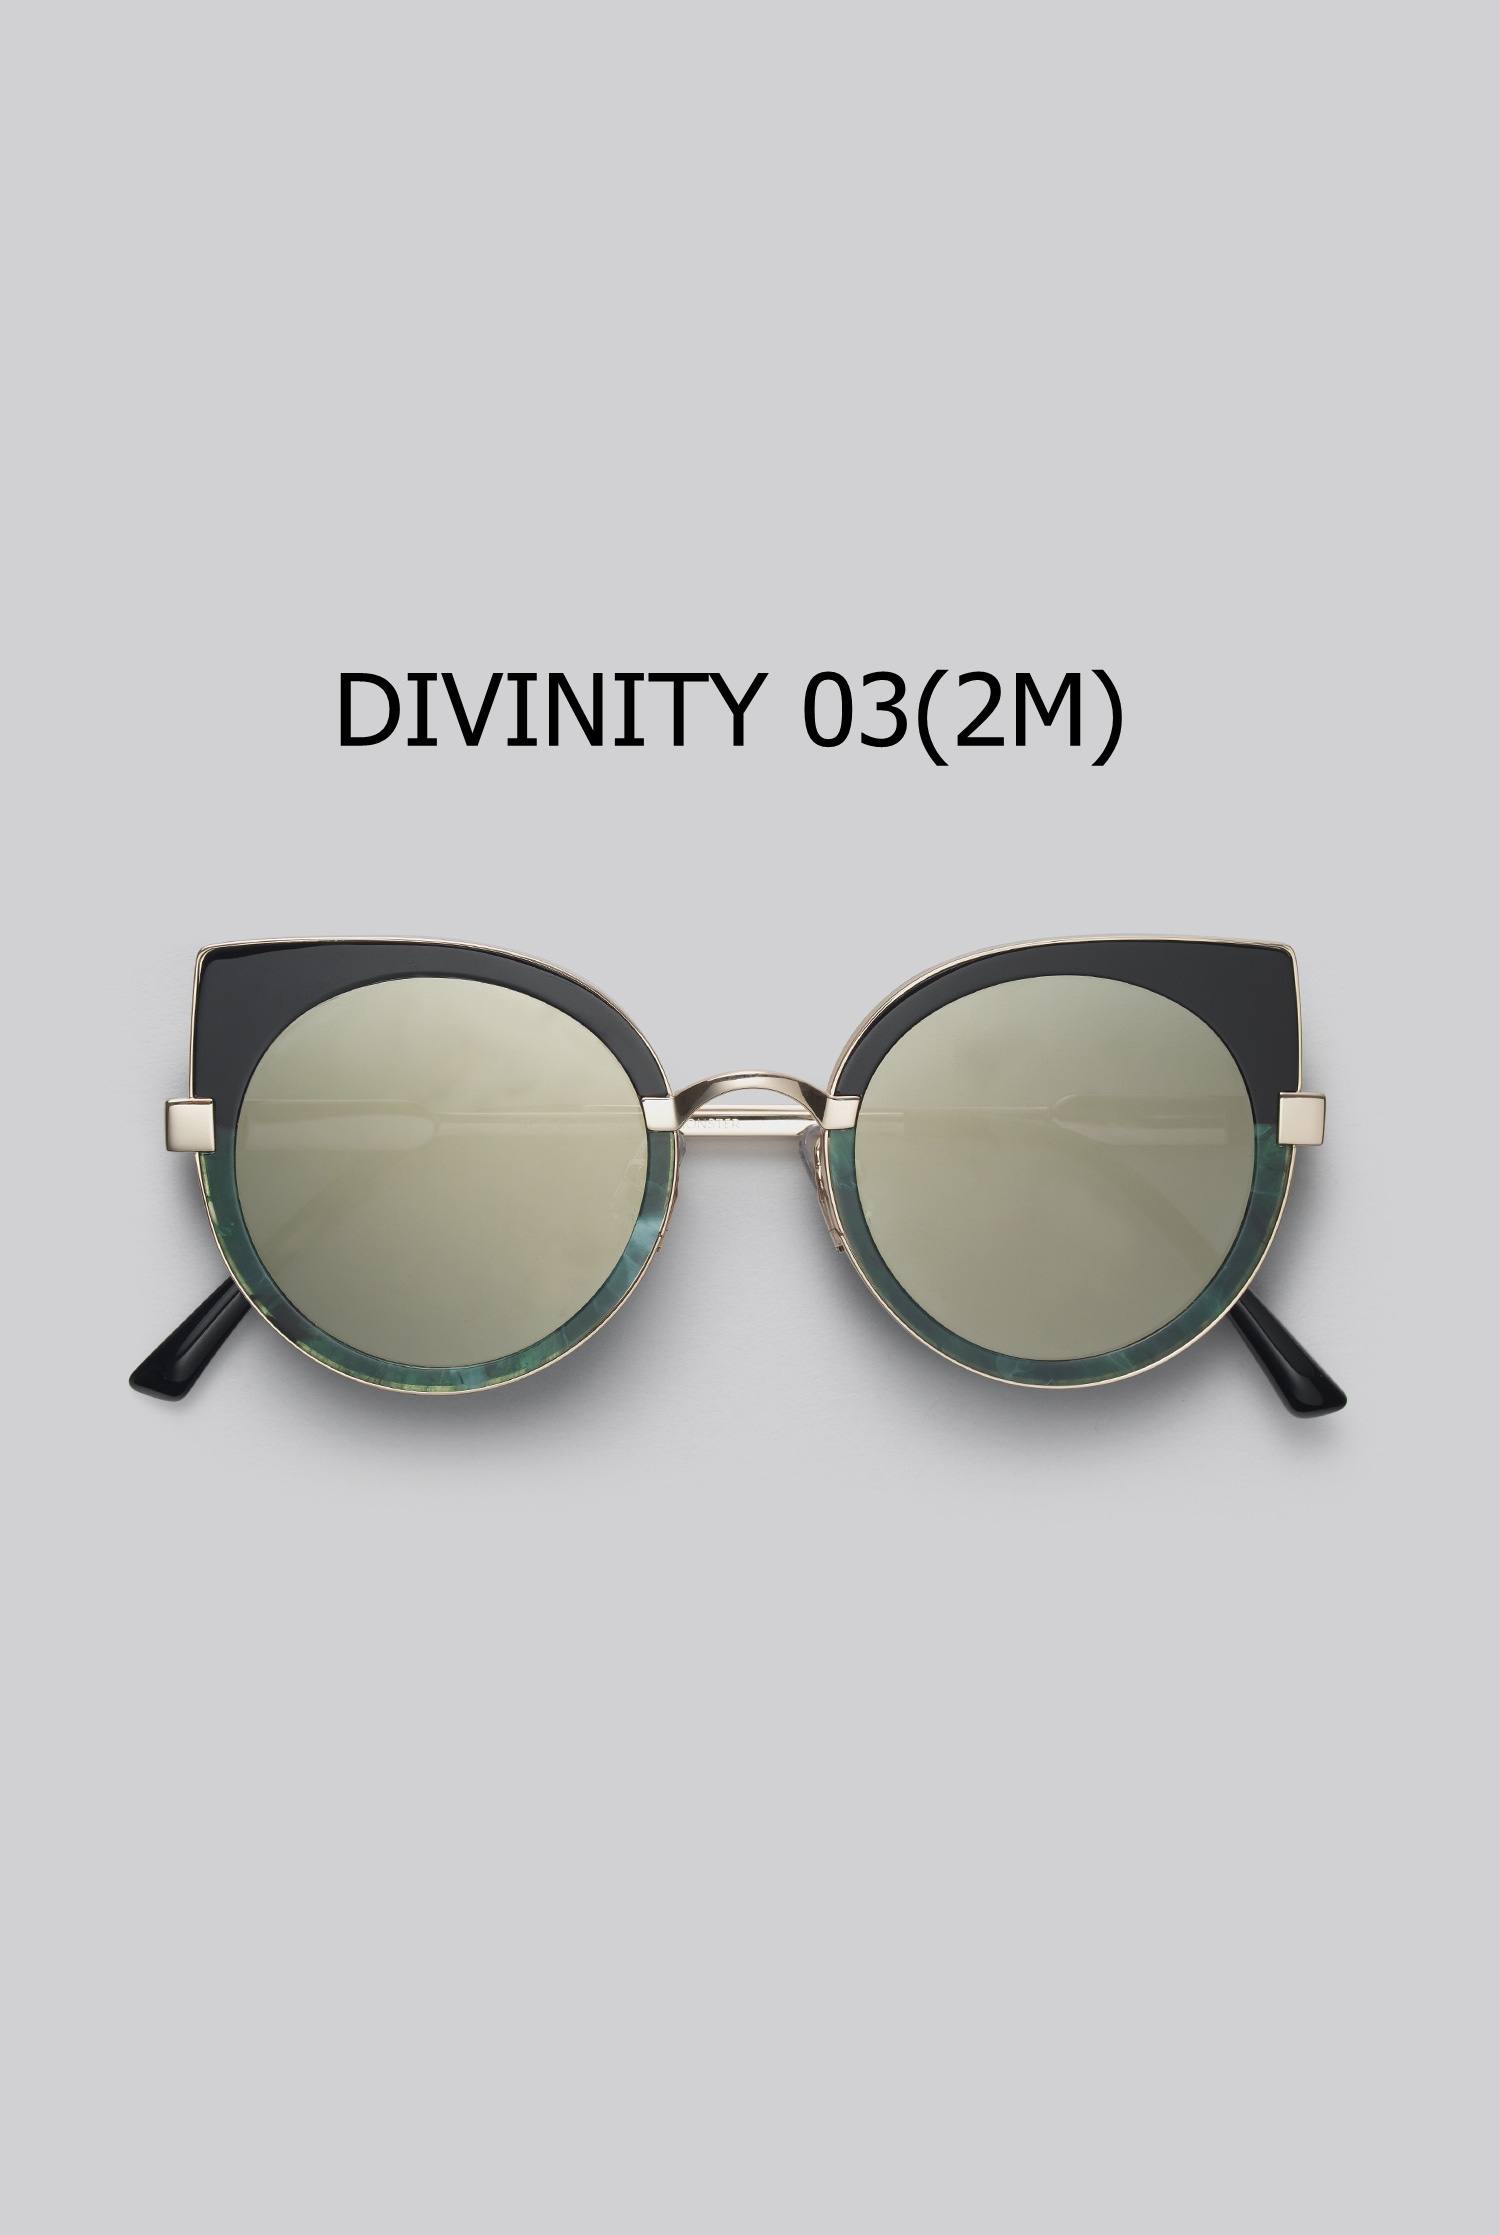 DIVINITY 03(2M)